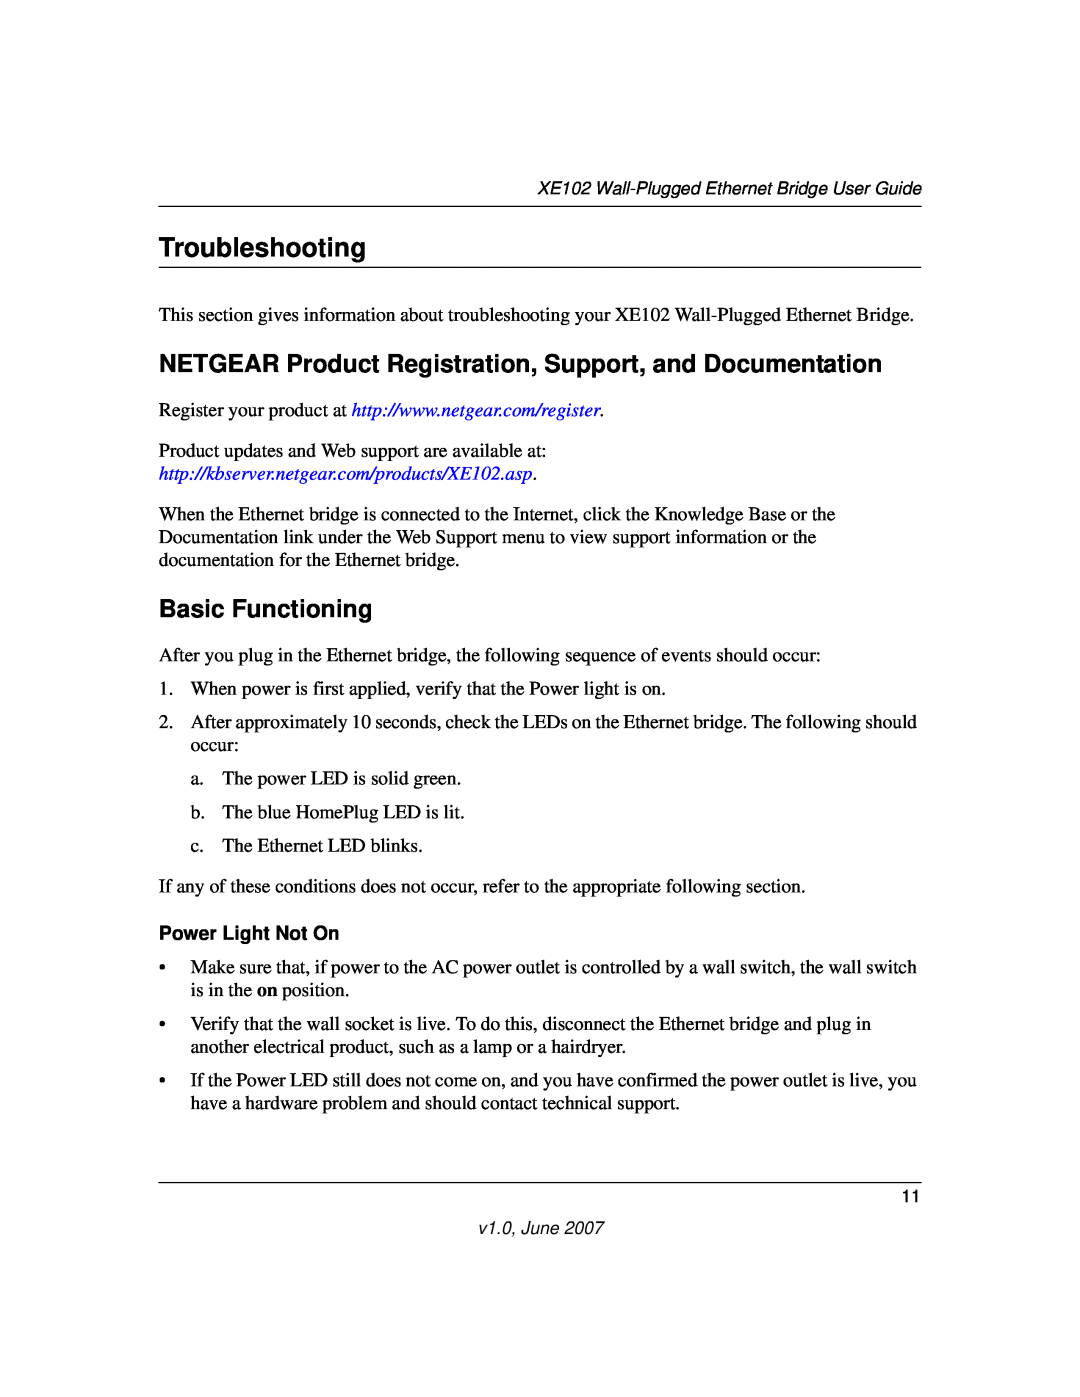 NETGEAR XE102 manual Troubleshooting, NETGEAR Product Registration, Support, and Documentation, Basic Functioning 